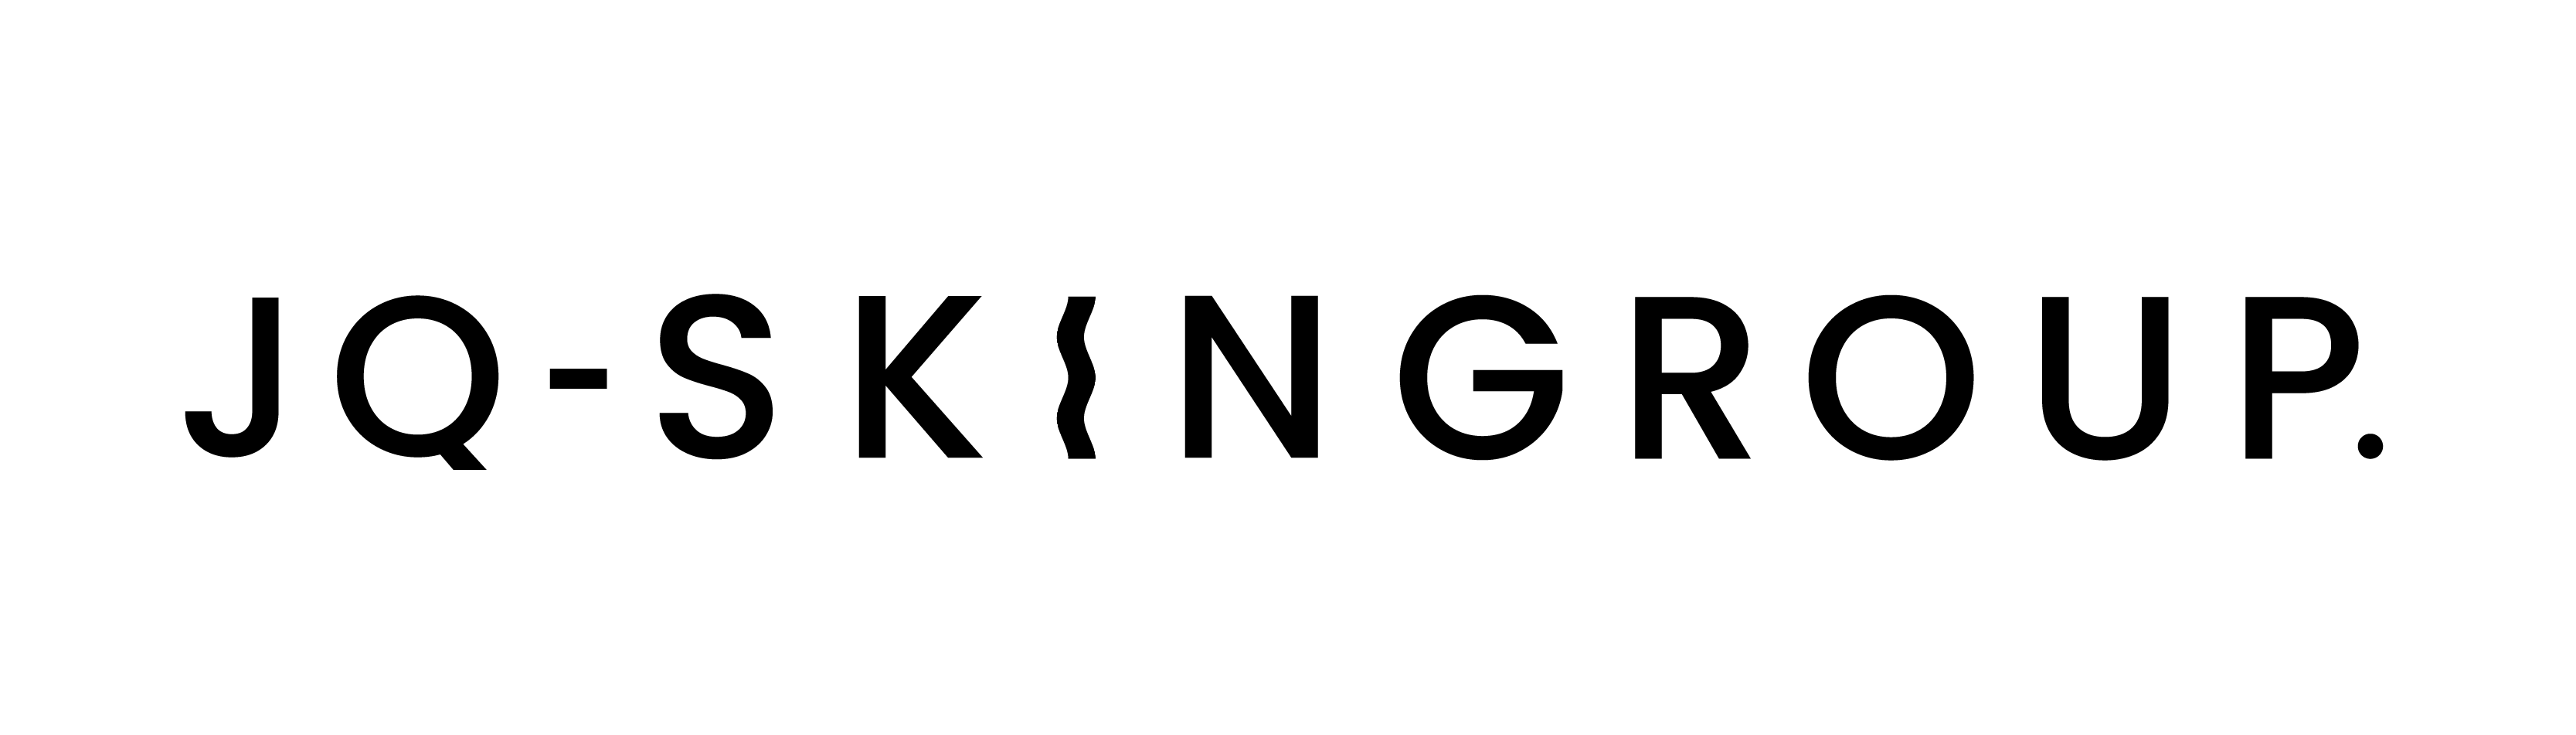 JQ skingroup logo